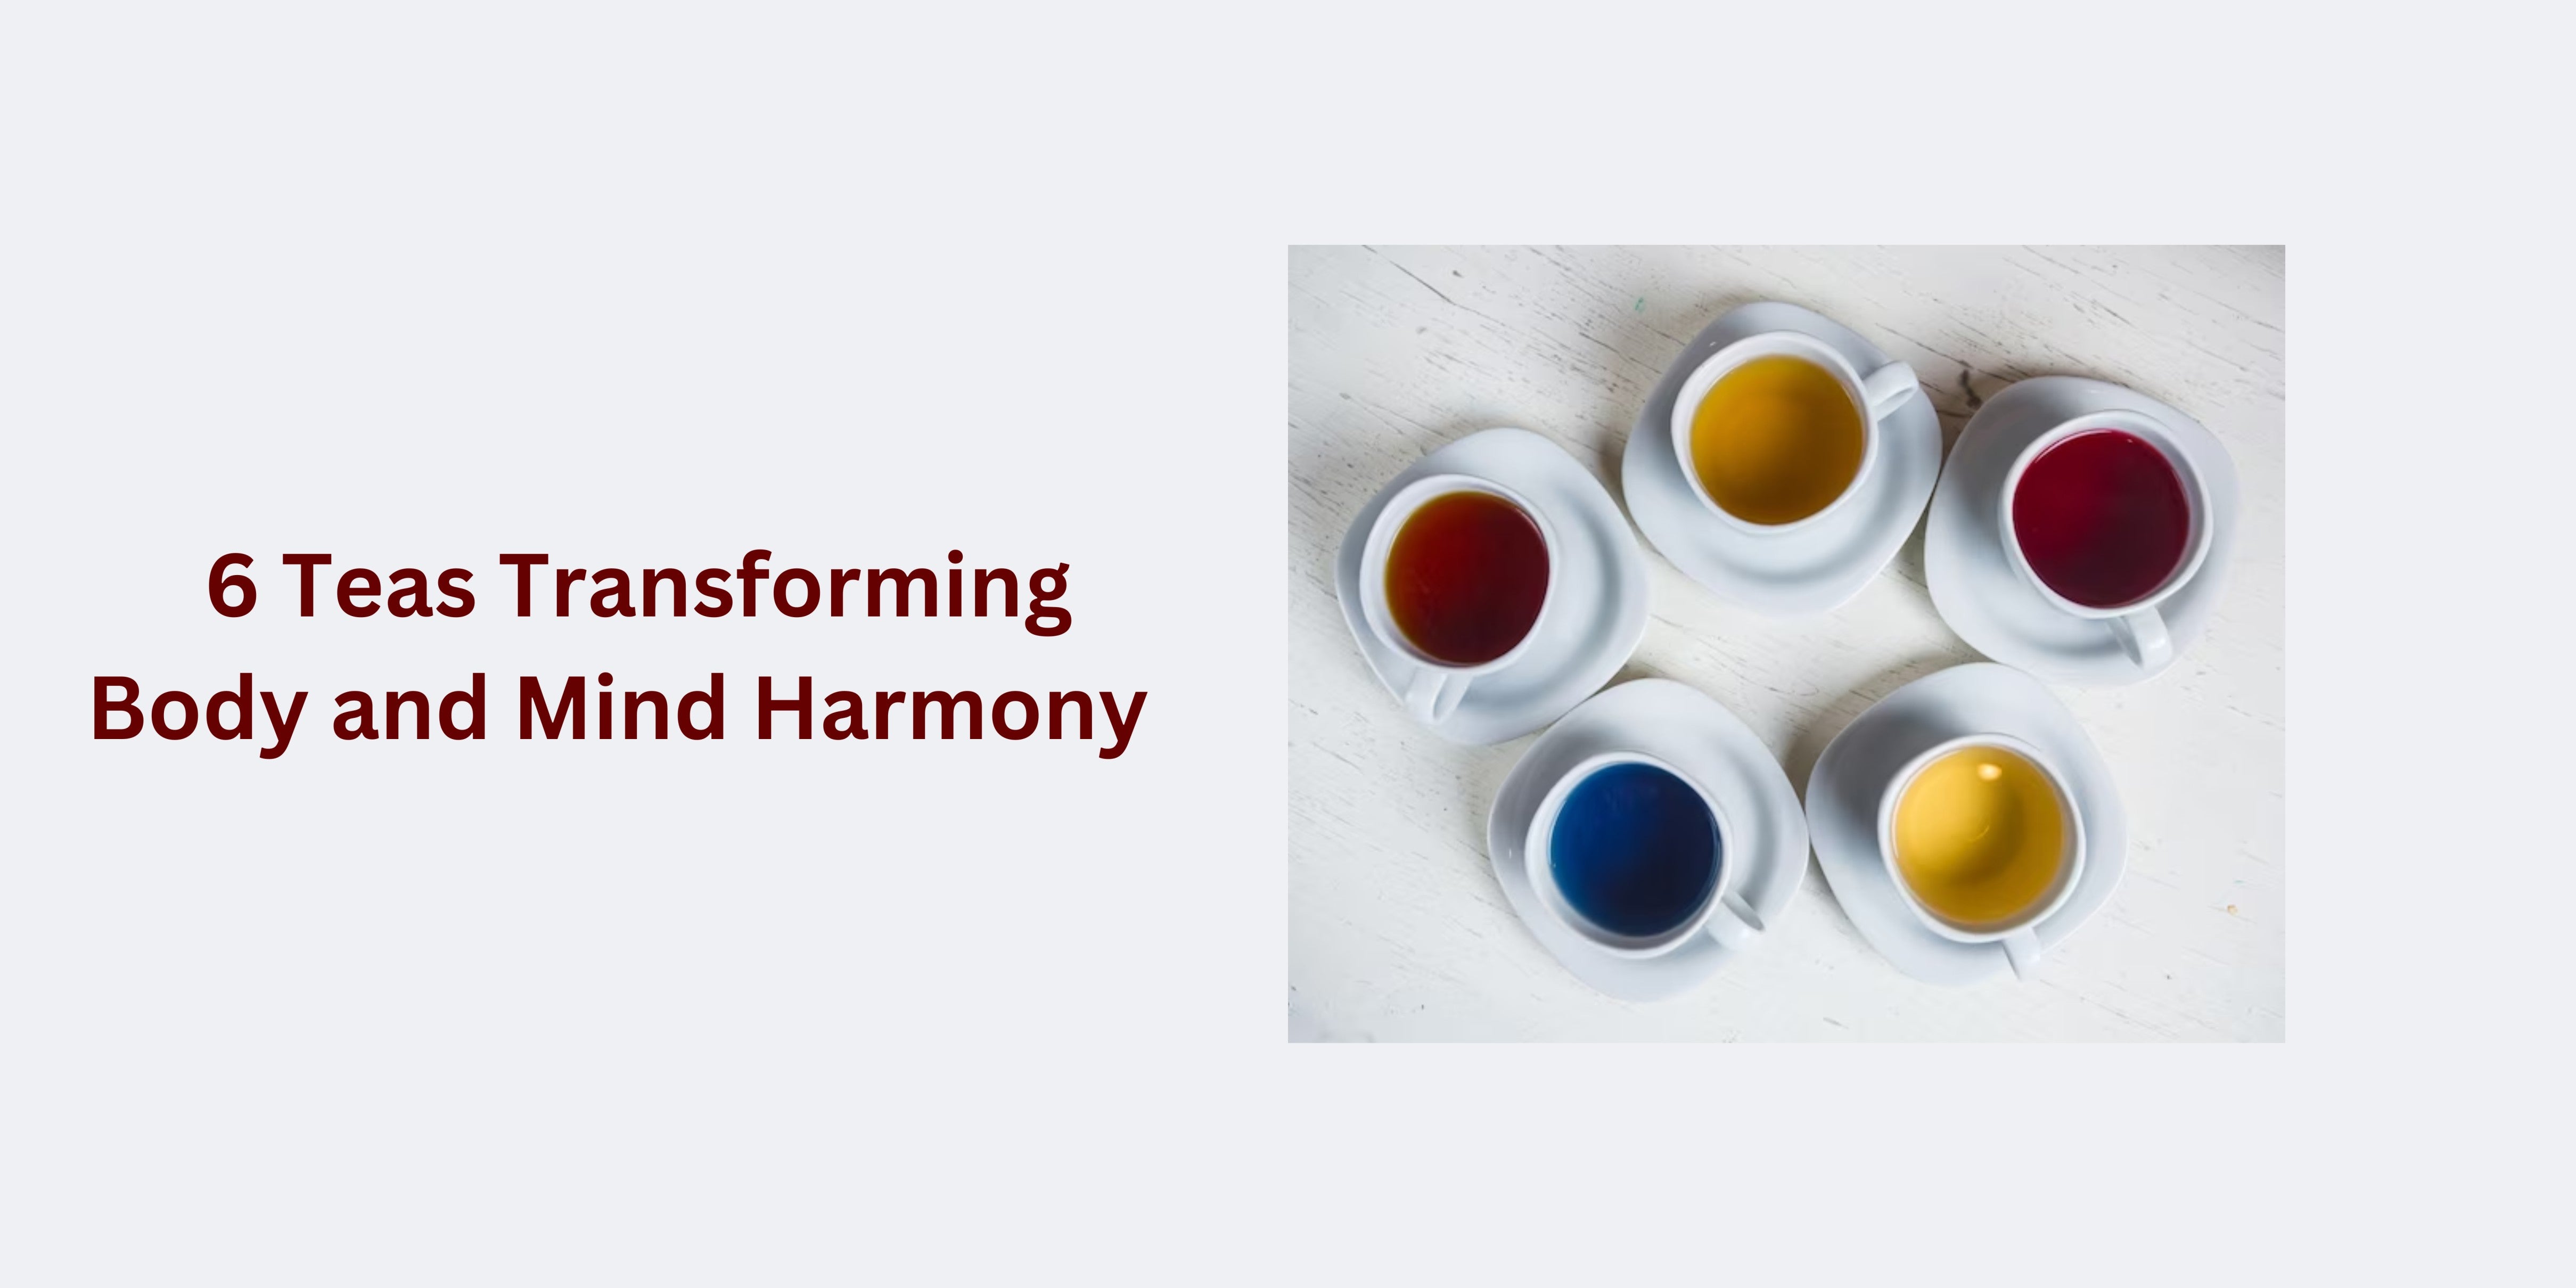 6 Teas Transforming Body and Mind Harmony